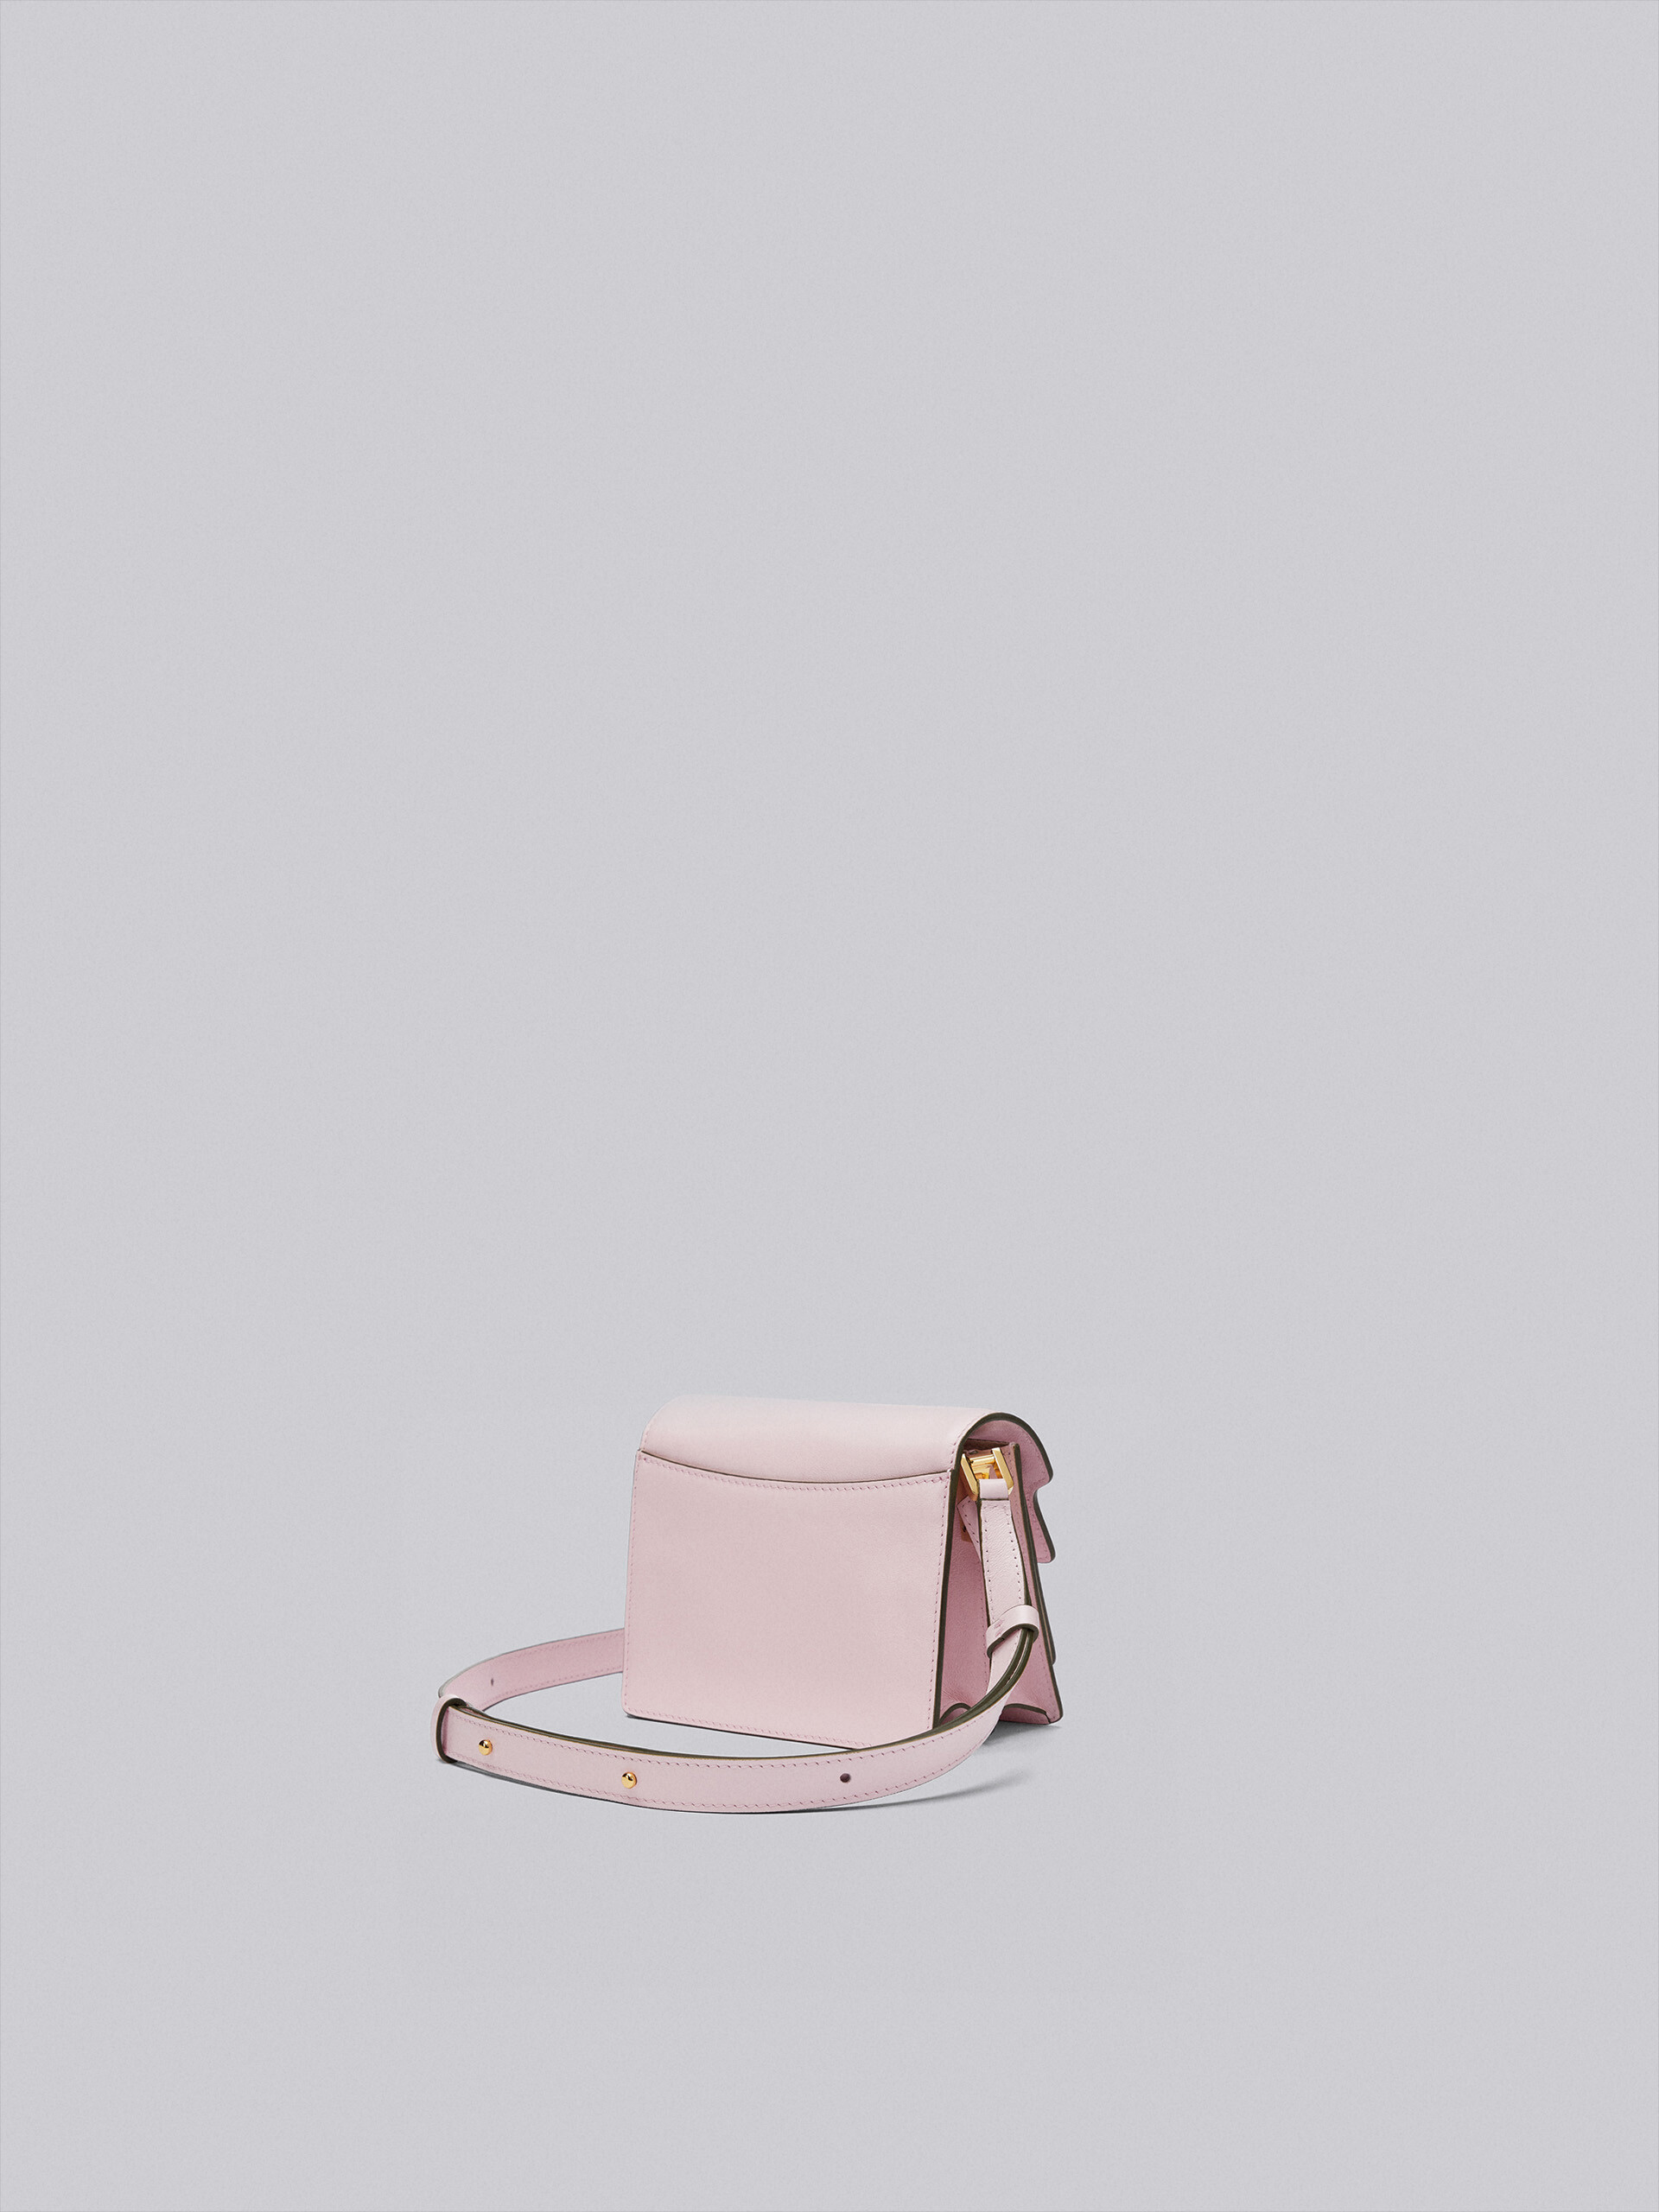 Minibolso TRUNK SOFT de piel rosa - Bolsos de hombro - Image 2